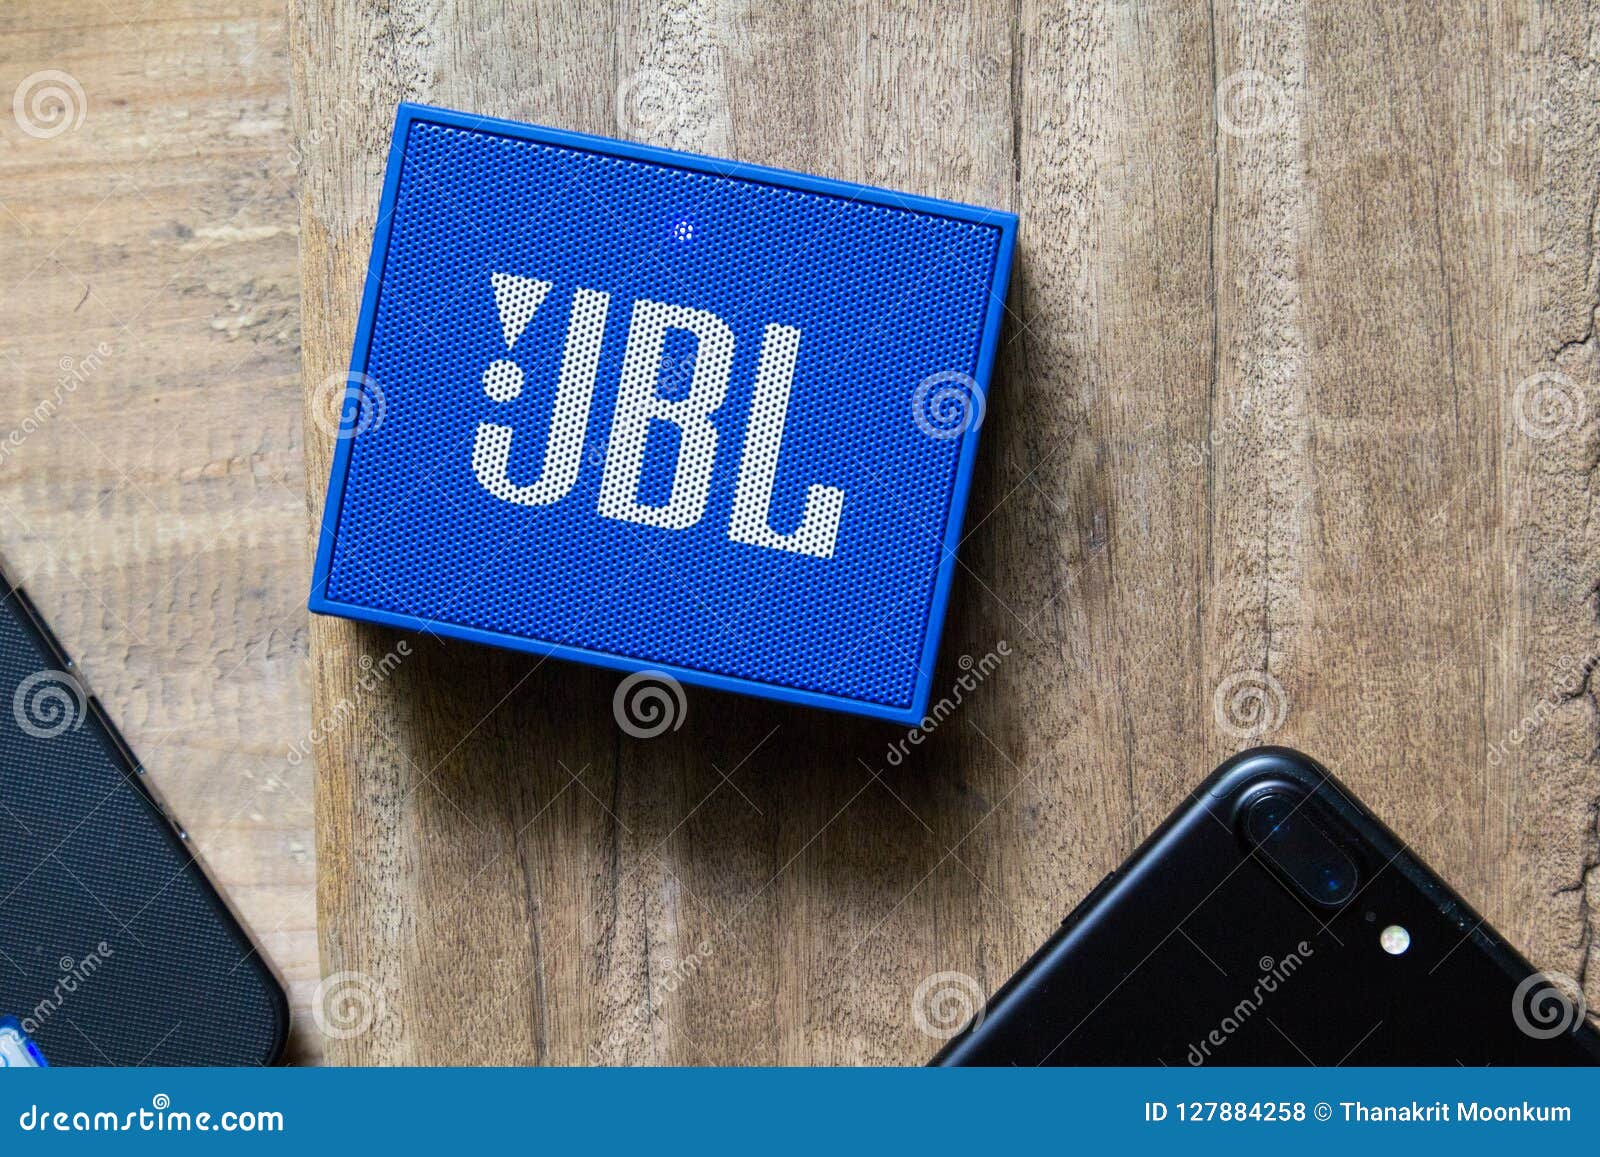 JBL Speaker Test Connection To 7+ Stock Photo - Image jblgo, iphone: 127884258